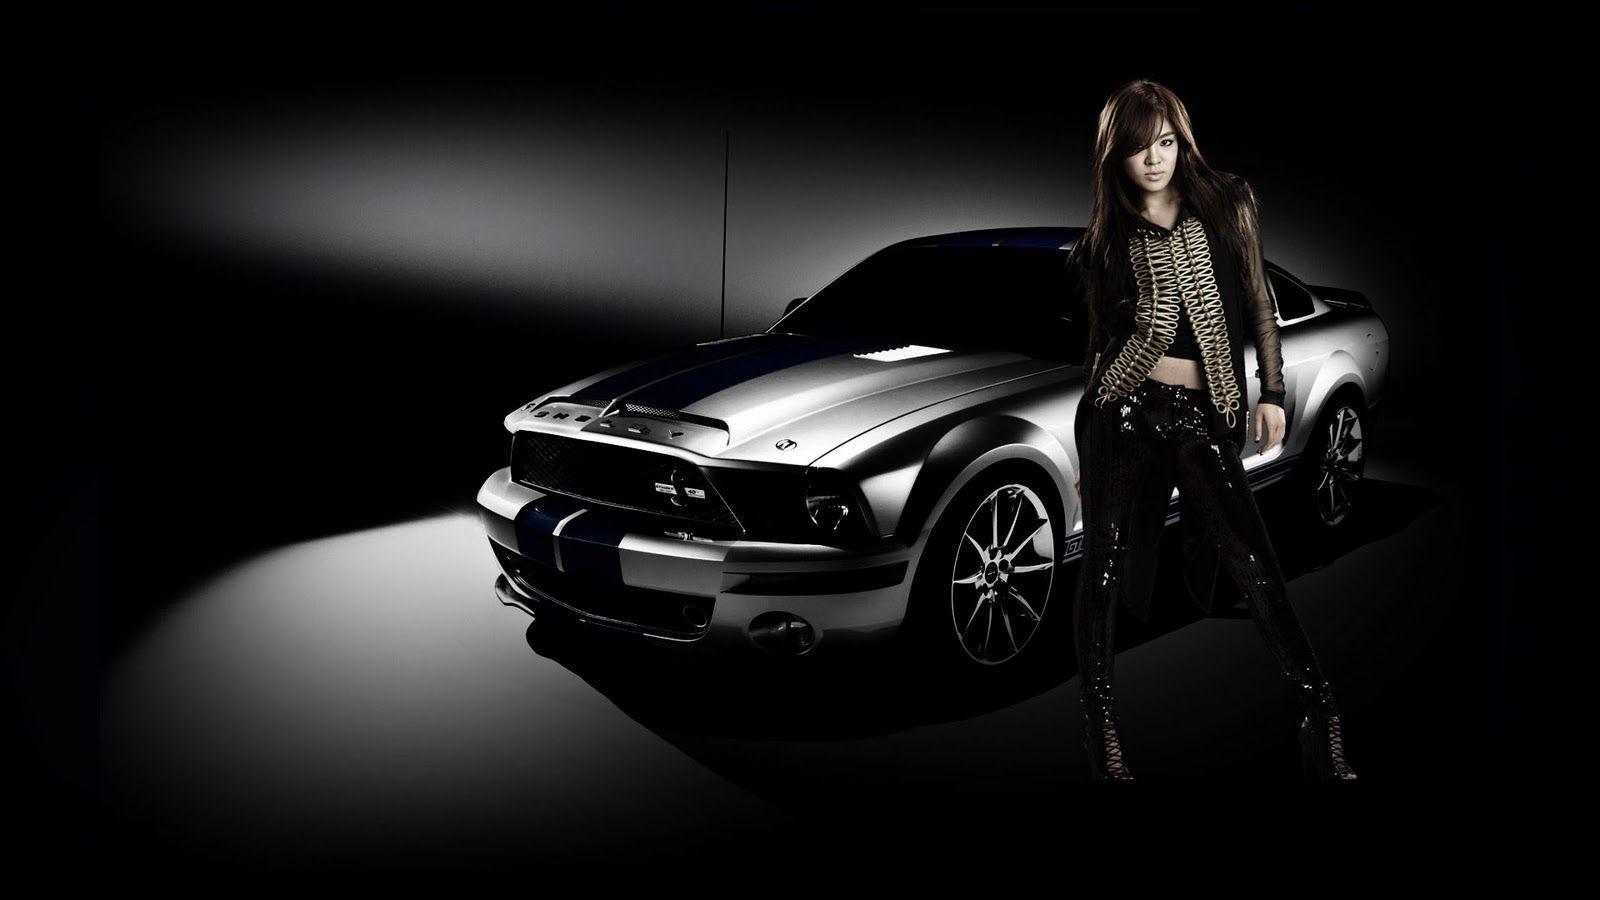 Hyoyeon SNSD Pose with Black Car Wallpaper. SNSD Artistic Gallery